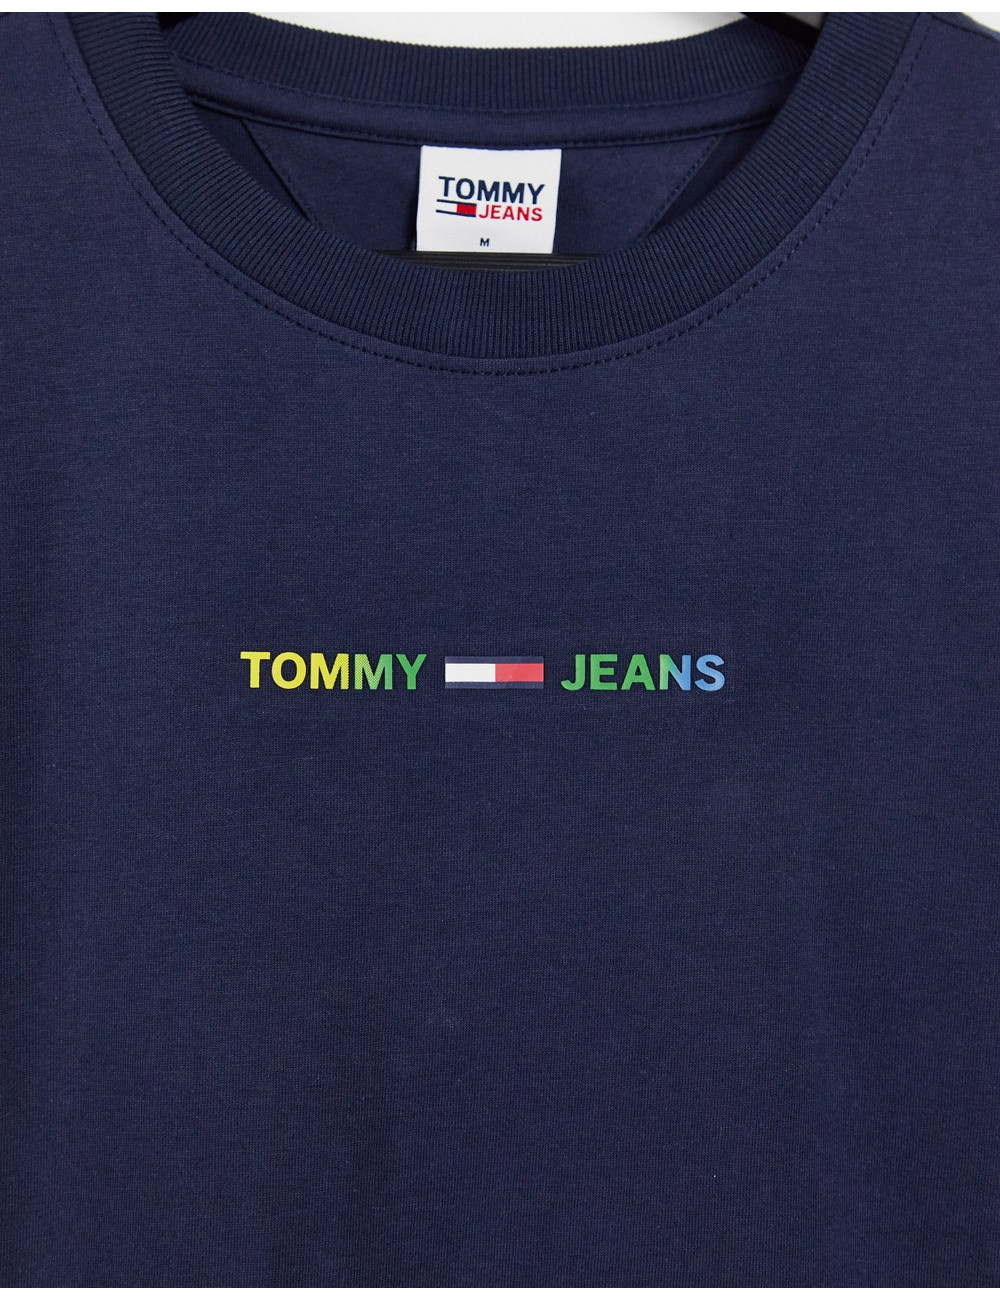 Tommy Jeans multicolour...